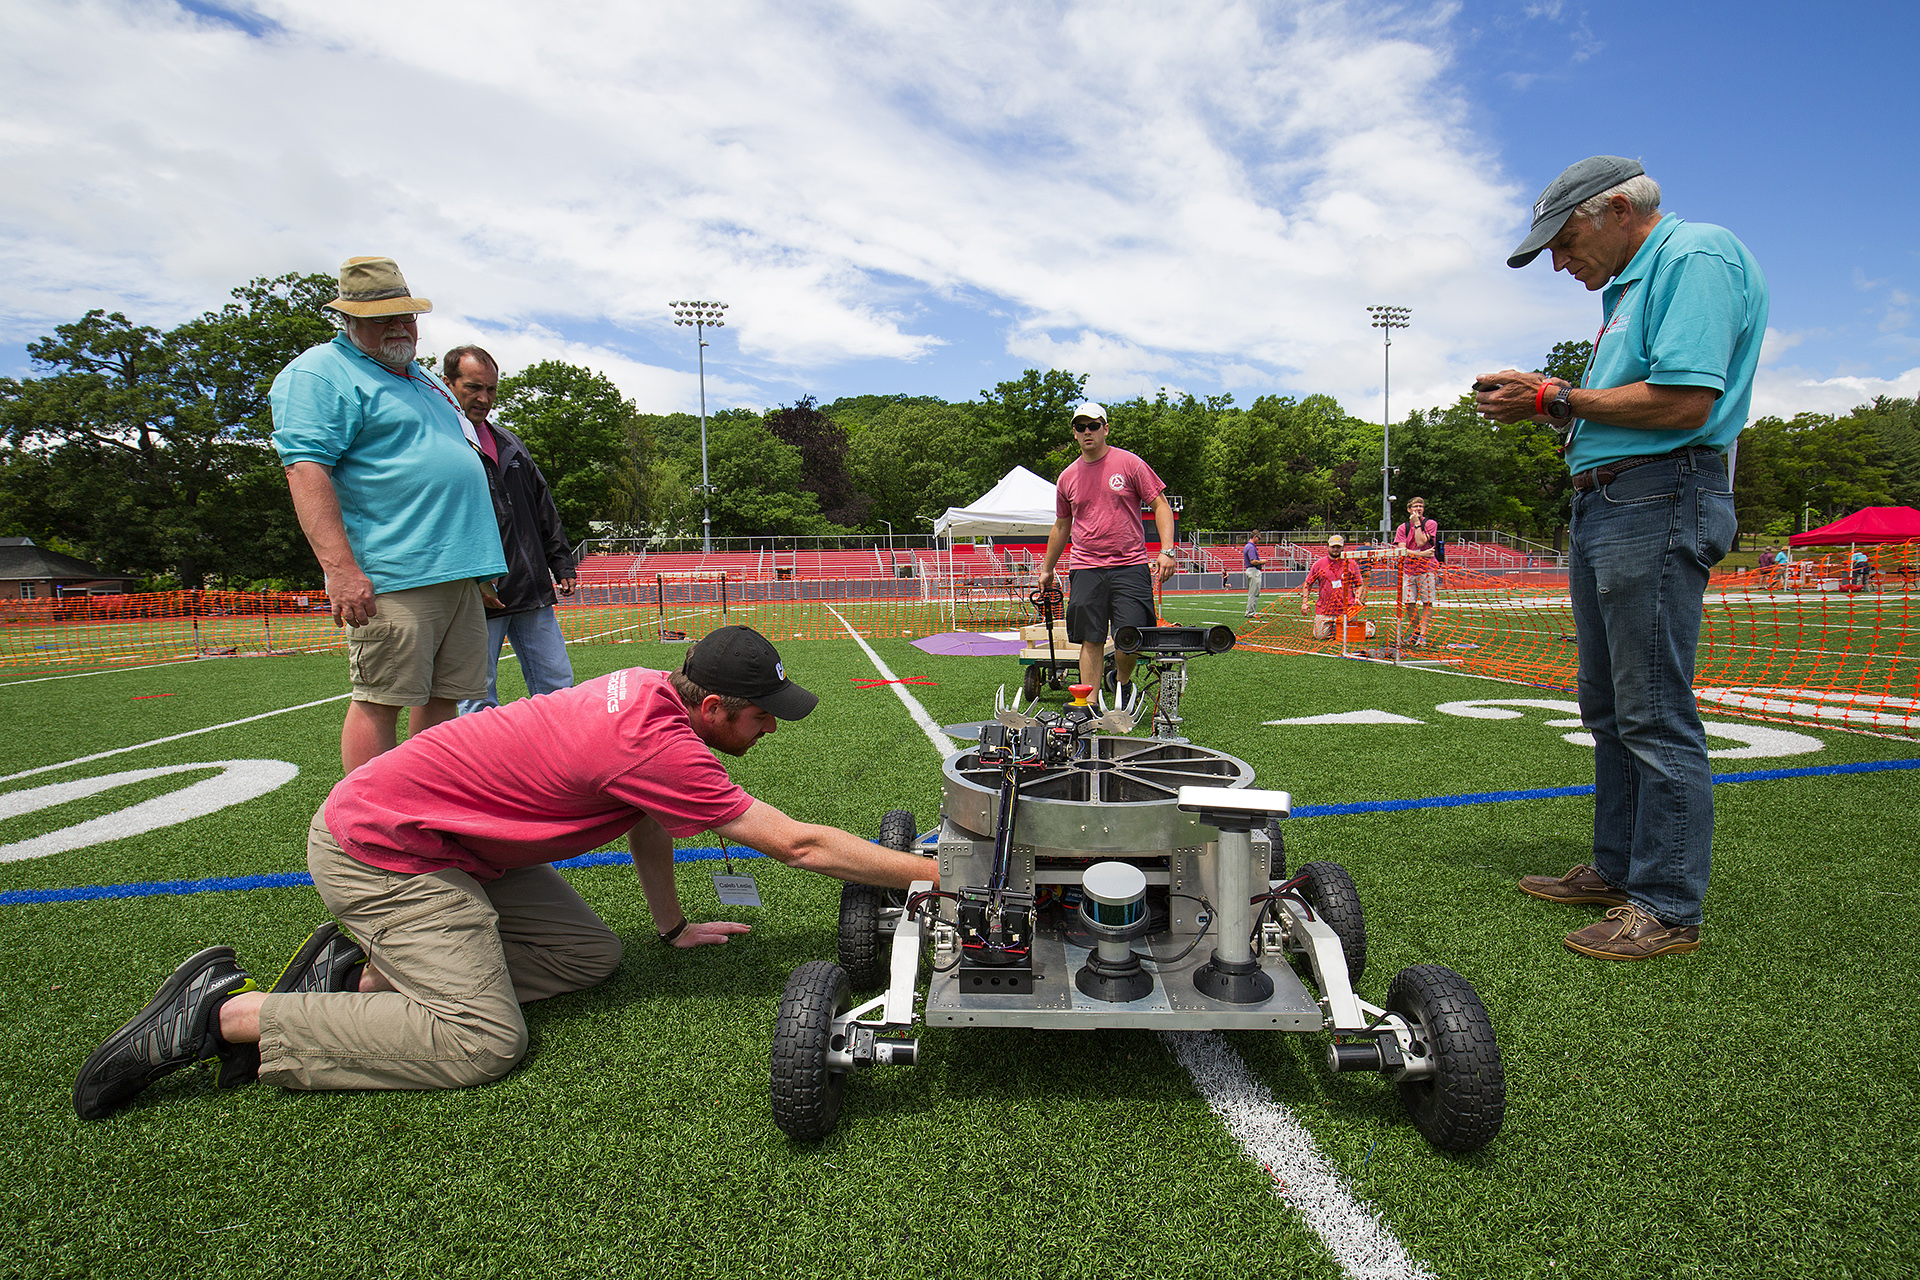 Team Alabama Astrobotics 2 for Sample Return Robot